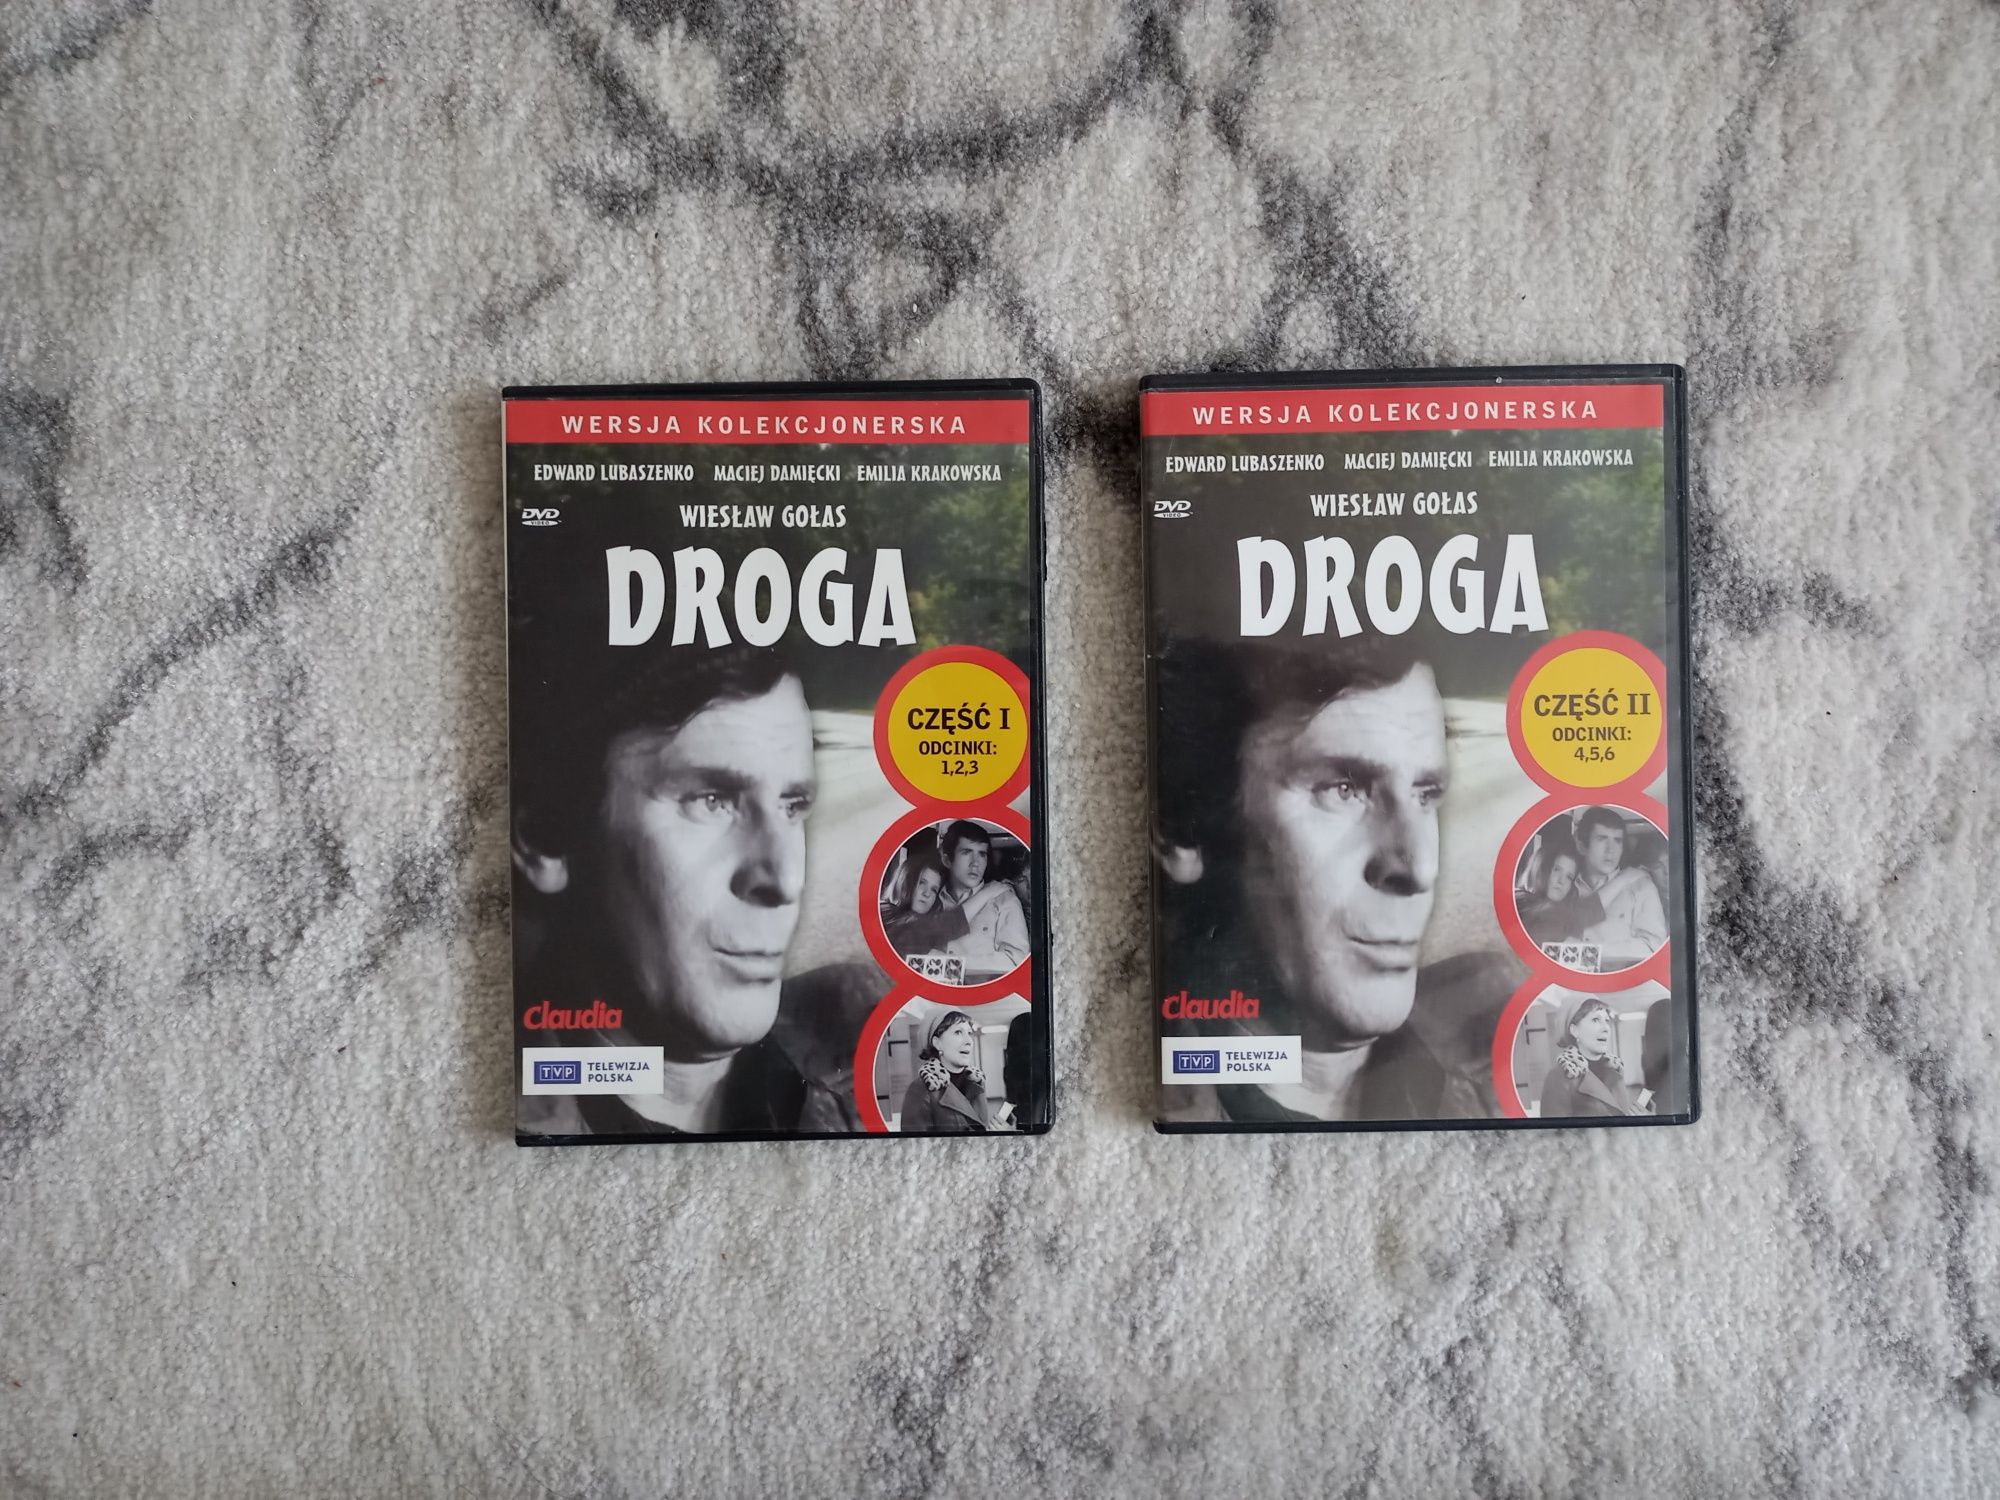 Droga - polski film, komplet 2 płyt na dvd. Jarocin • OLX.pl